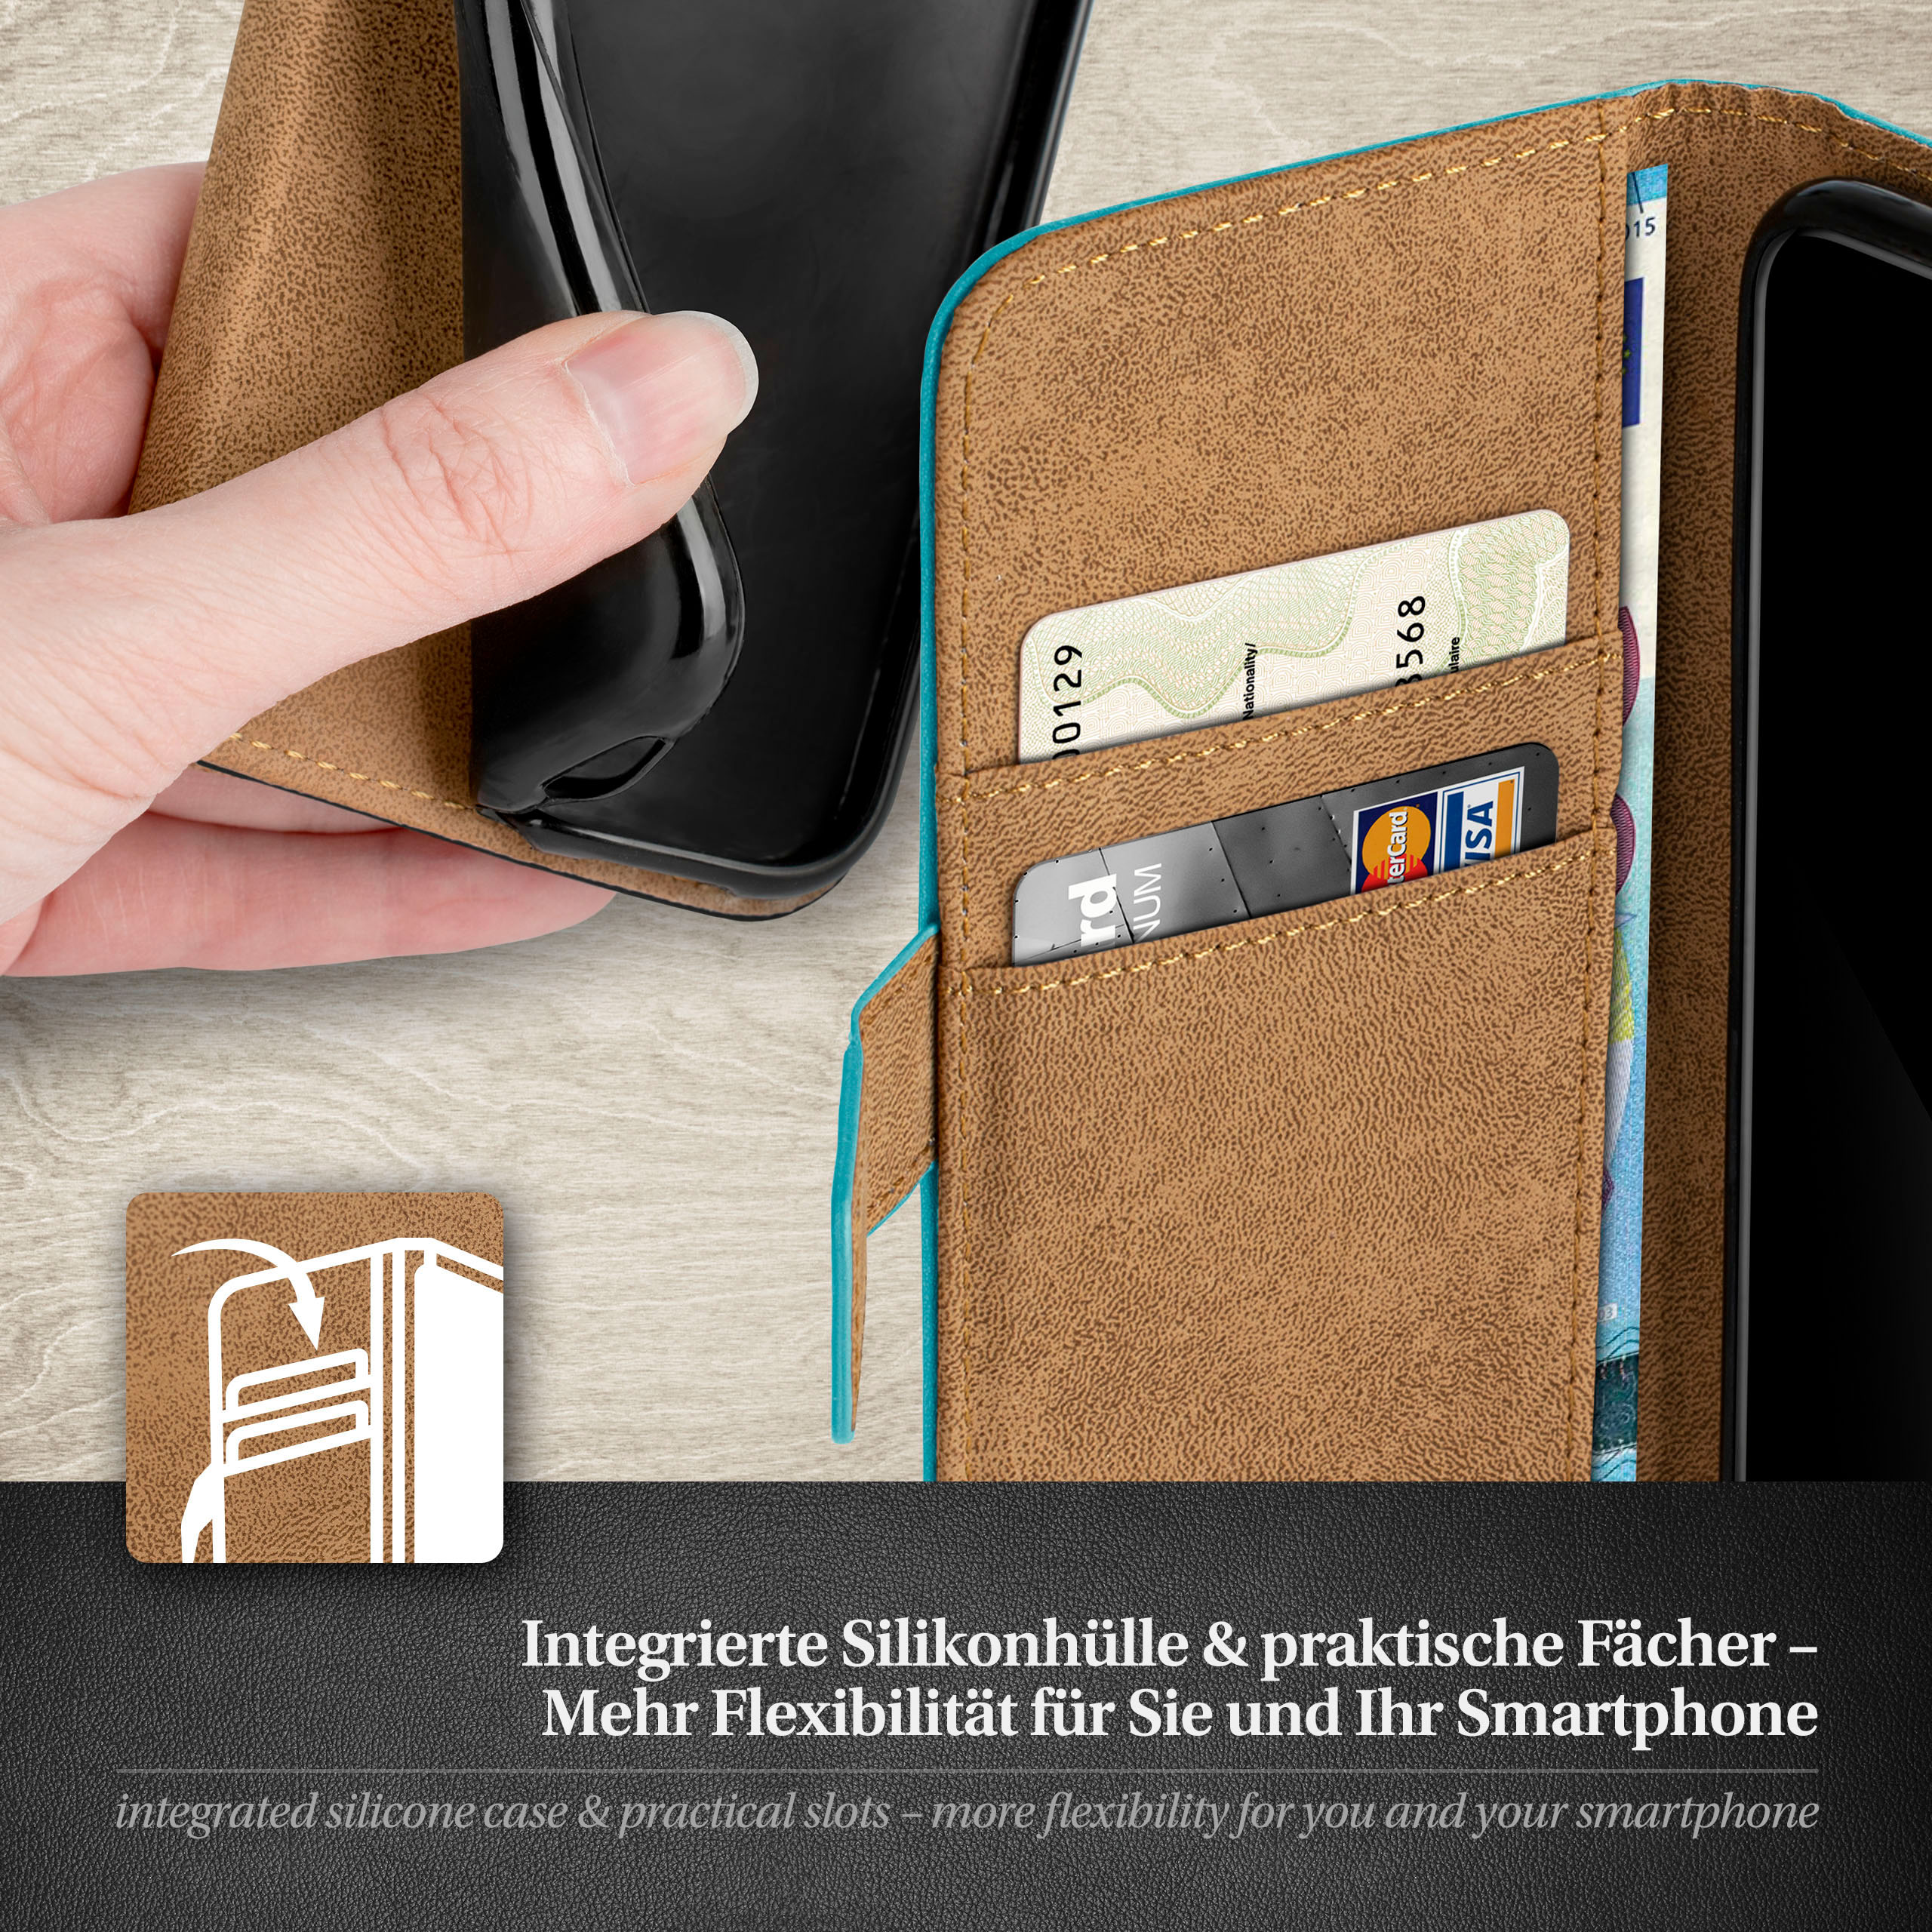 Book MOEX Case, Galaxy Samsung, S6, Aqua-Cyan Bookcover,